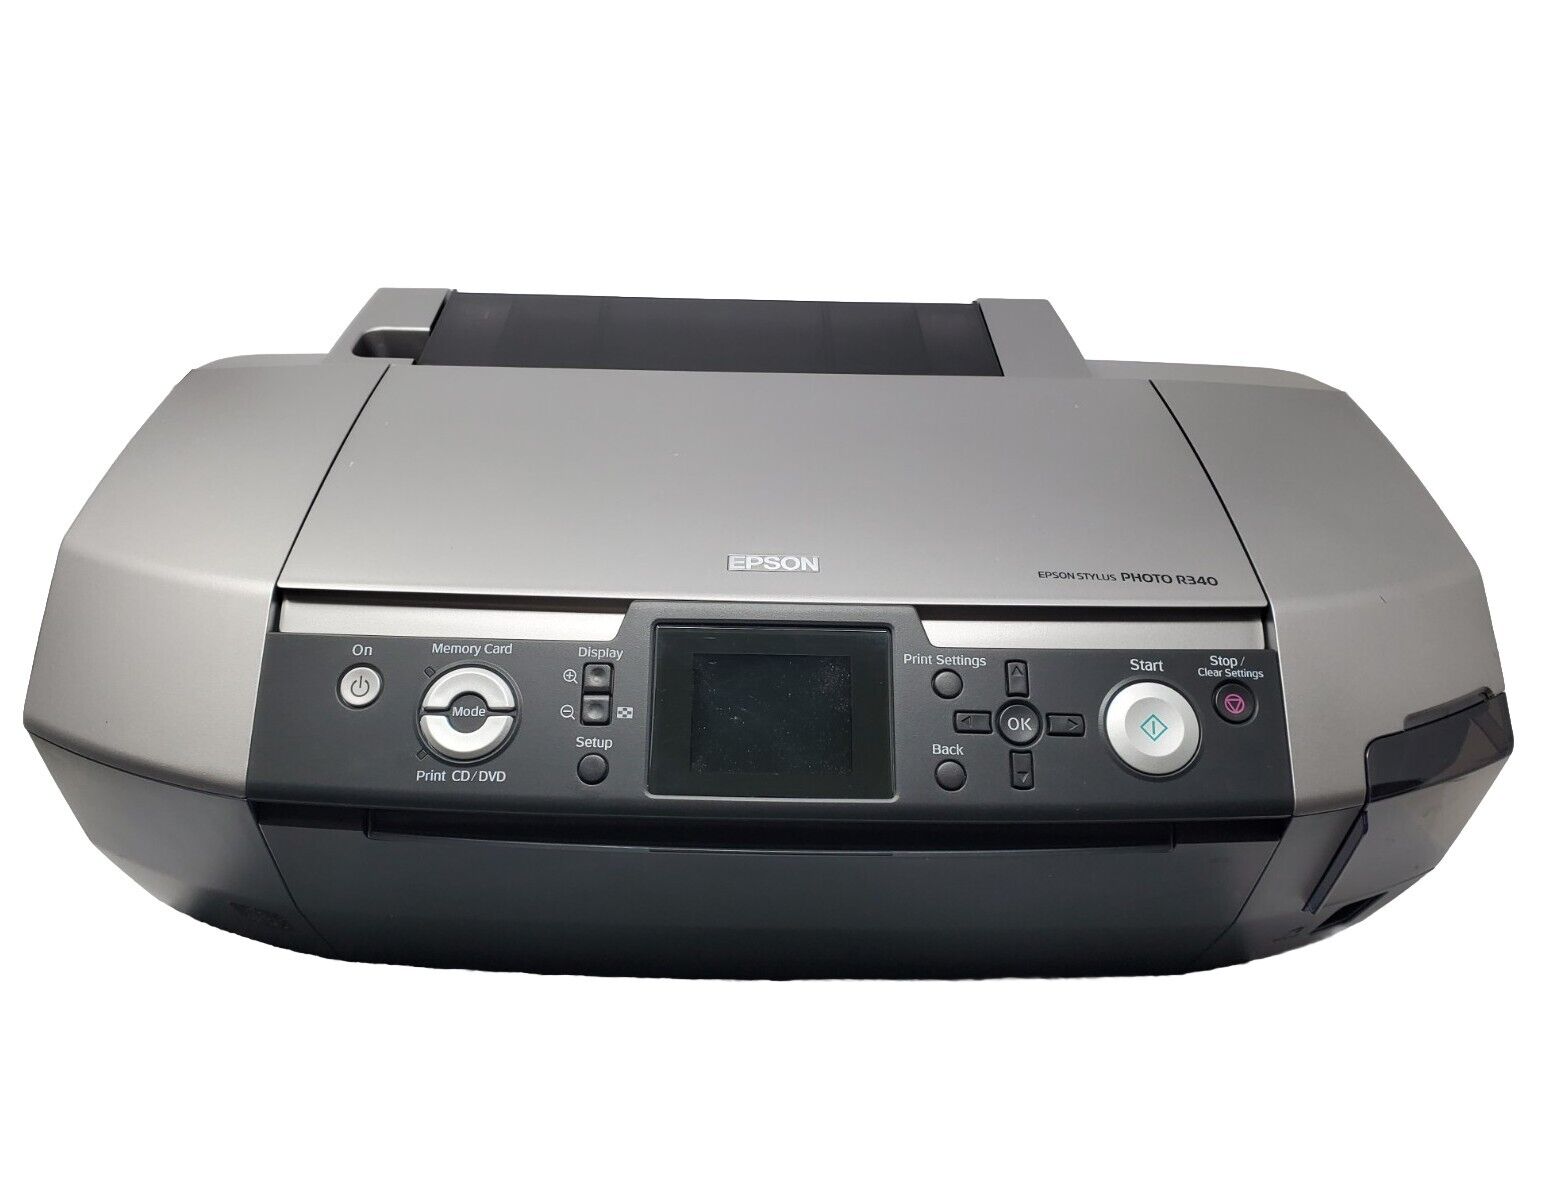 Epson Stylus R340 Digital Photo Inkjet Printer Tested And Fully Functional 